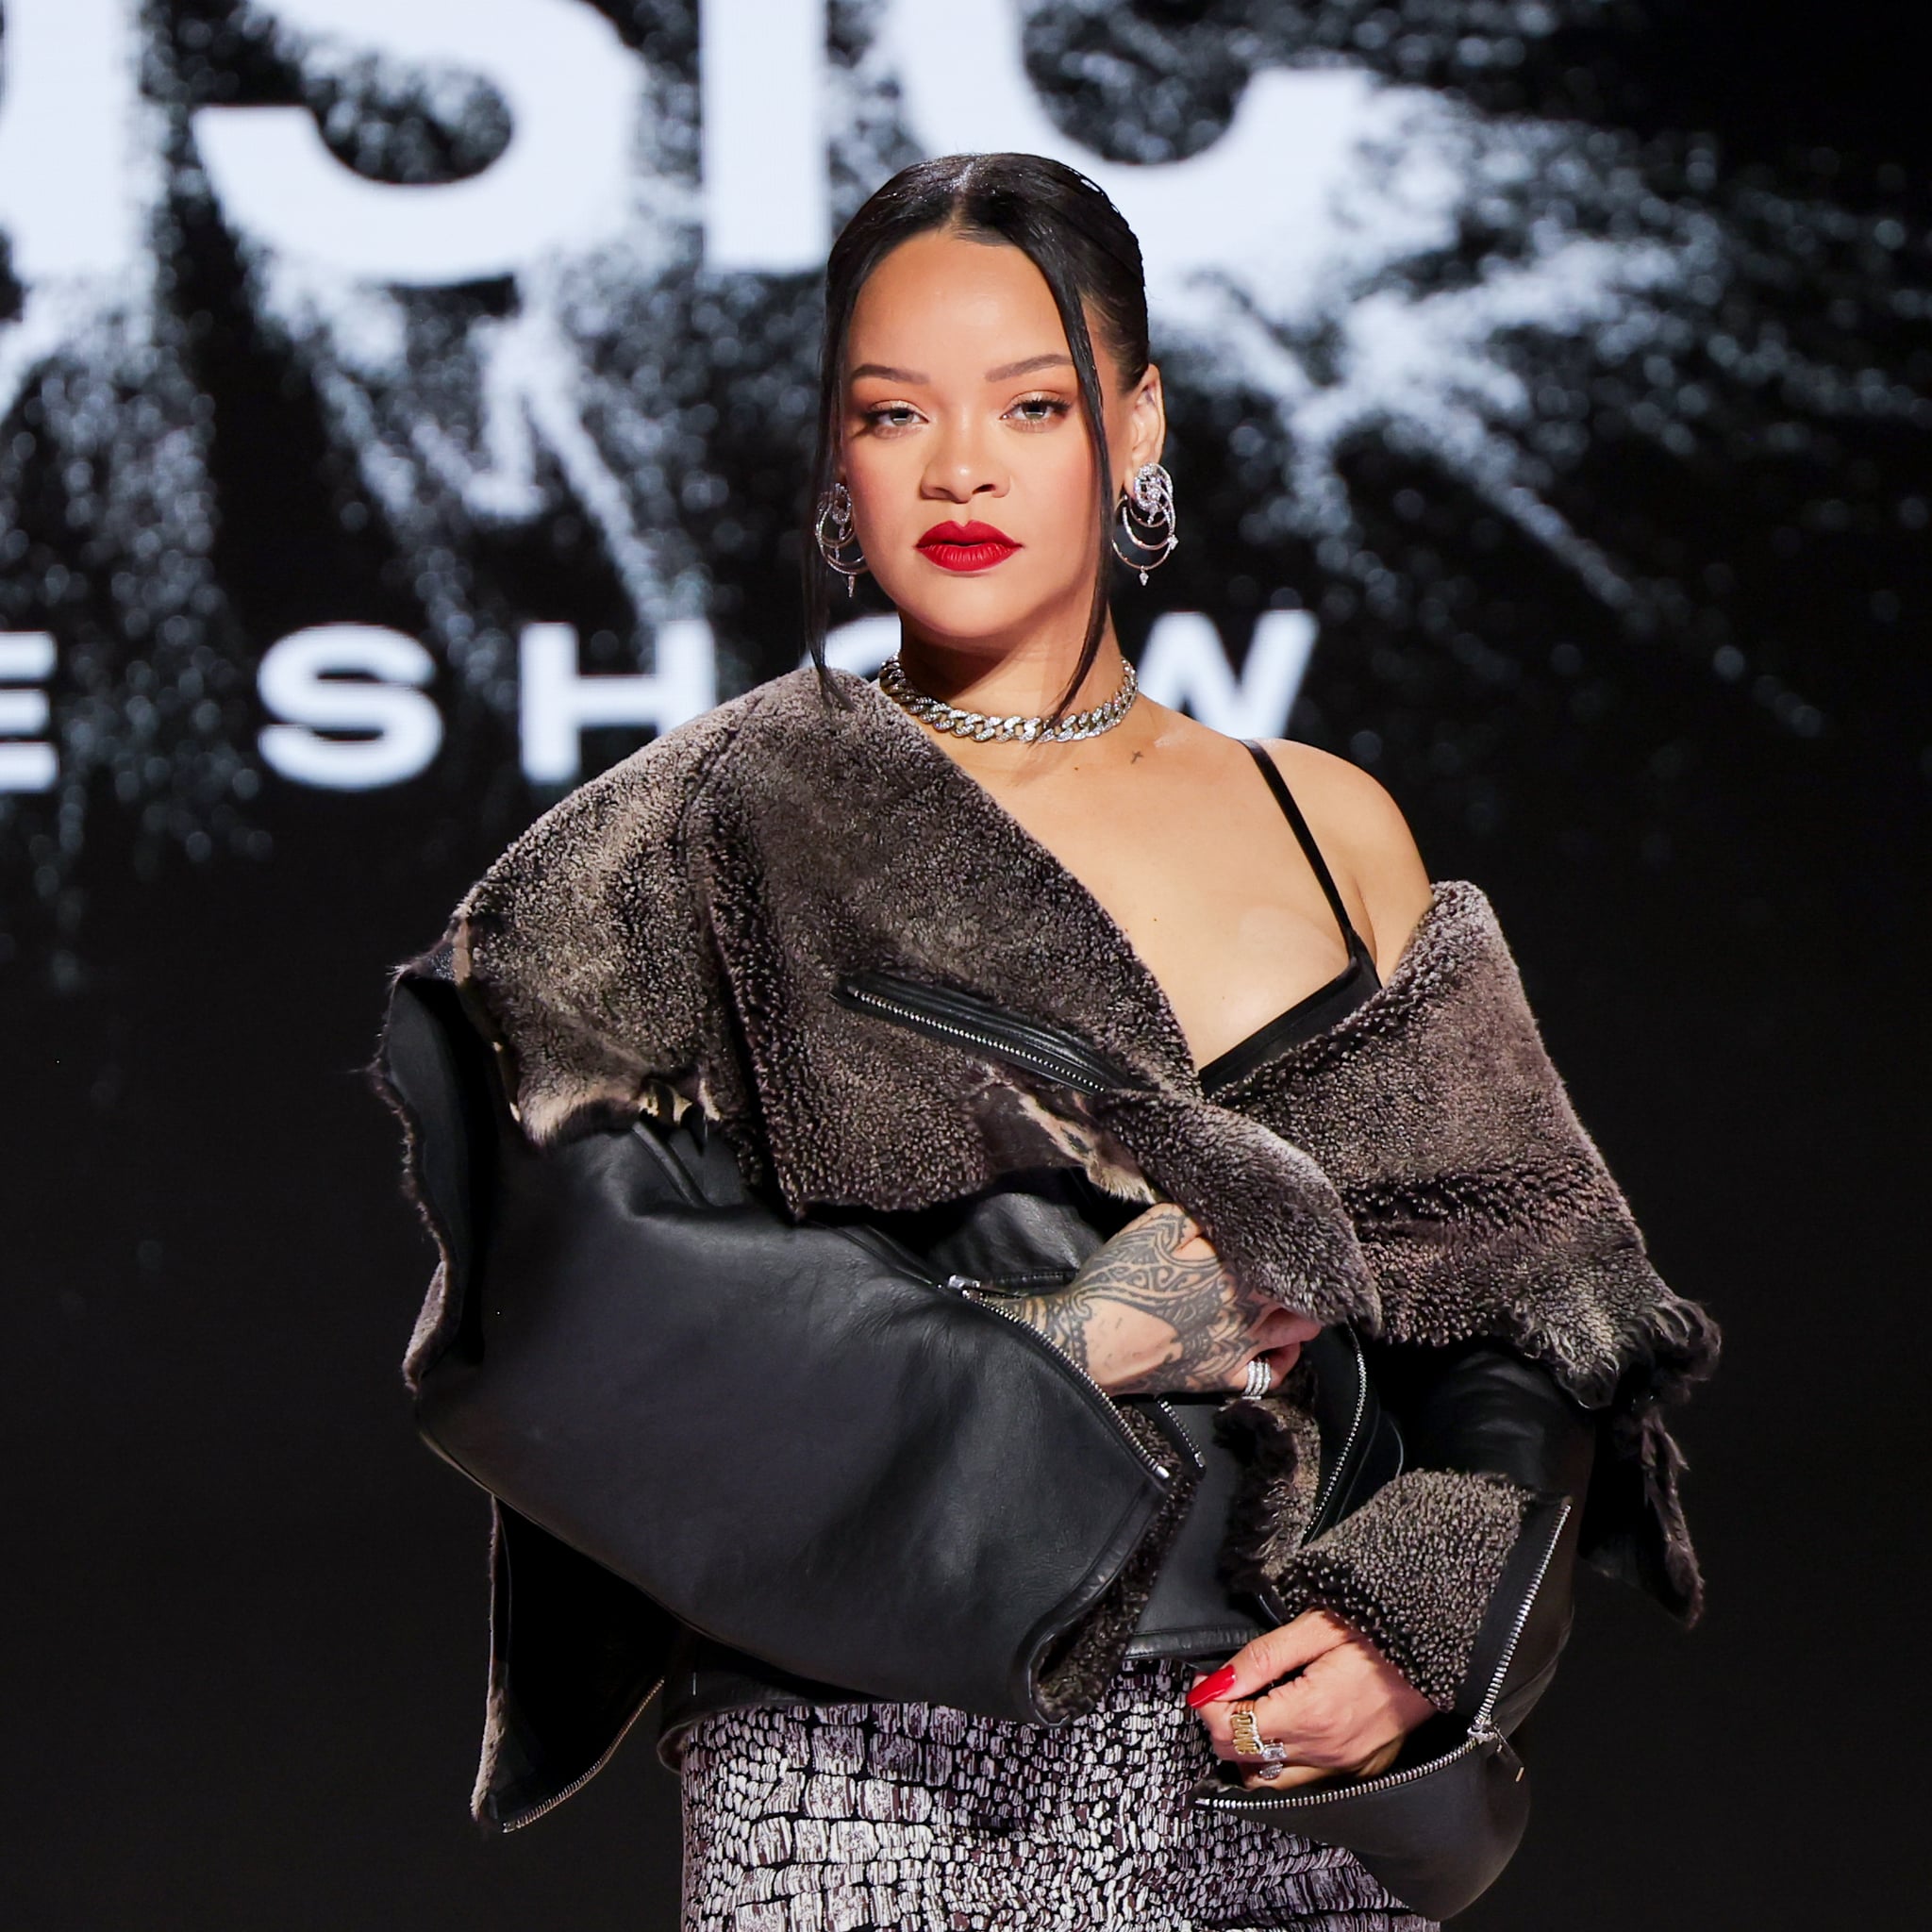 Rihanna's Super Bowl outfit designer unveils latest catwalk collection